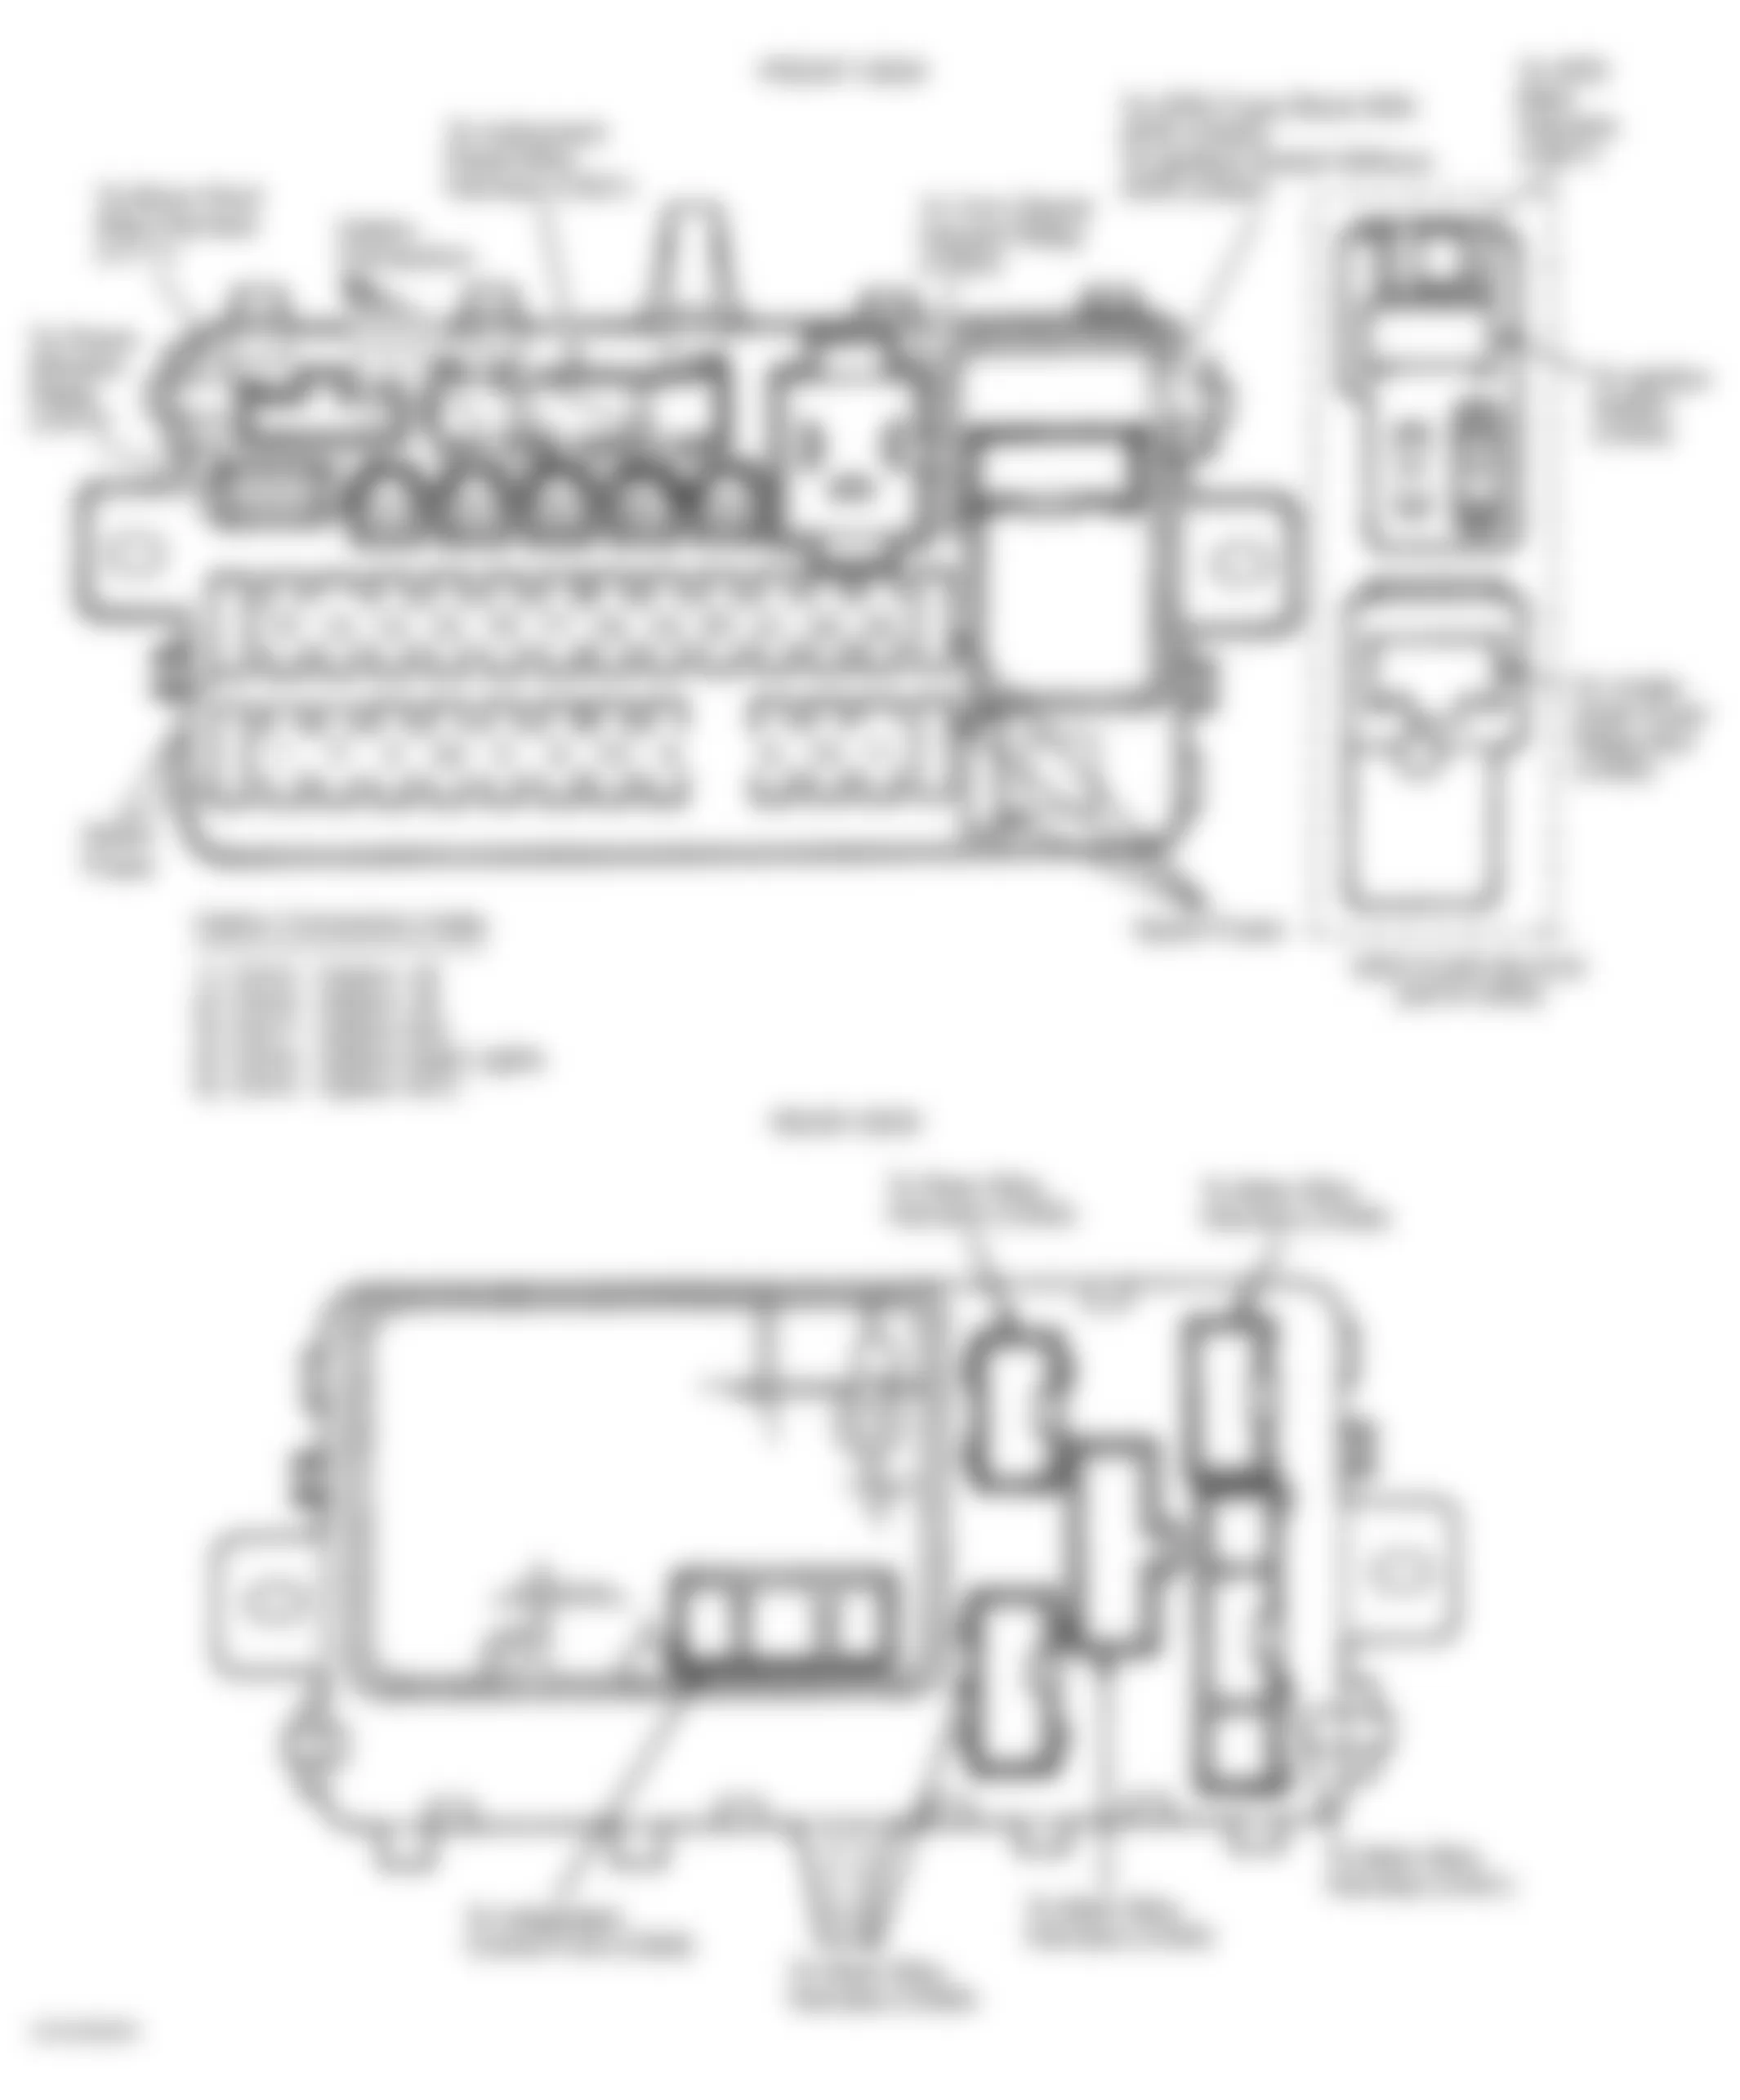 Honda Civic del Sol Si 1993 - Component Locations -  Identifying Under-Dash Fuse/Relay Box Components (1994-95 Civic)